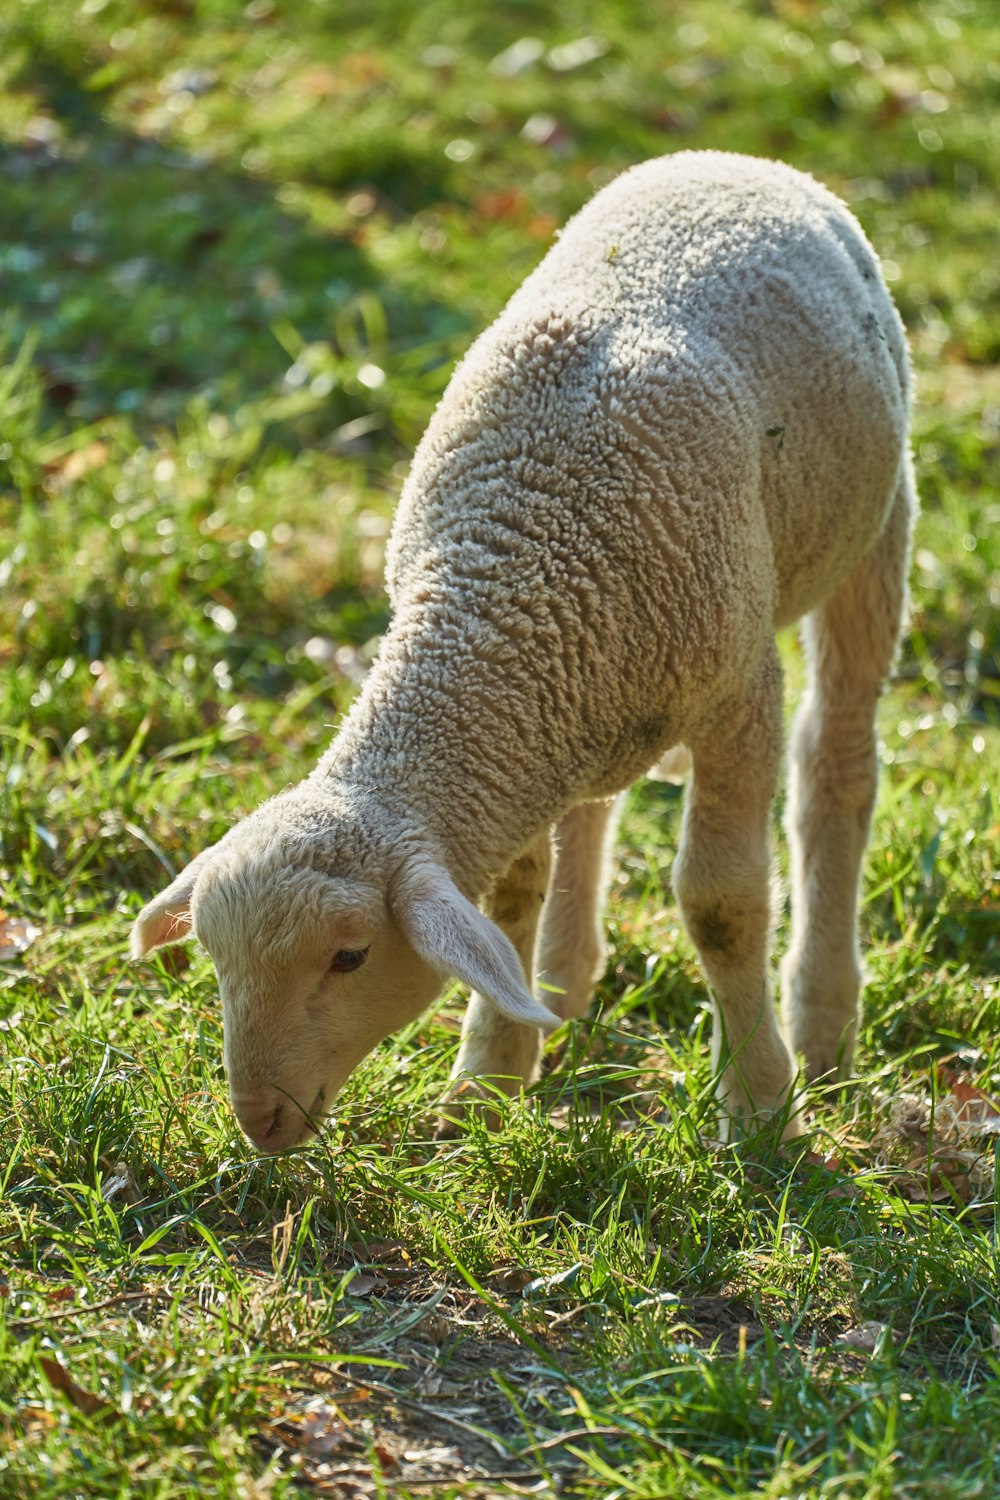 white sheep on green grass during daytime